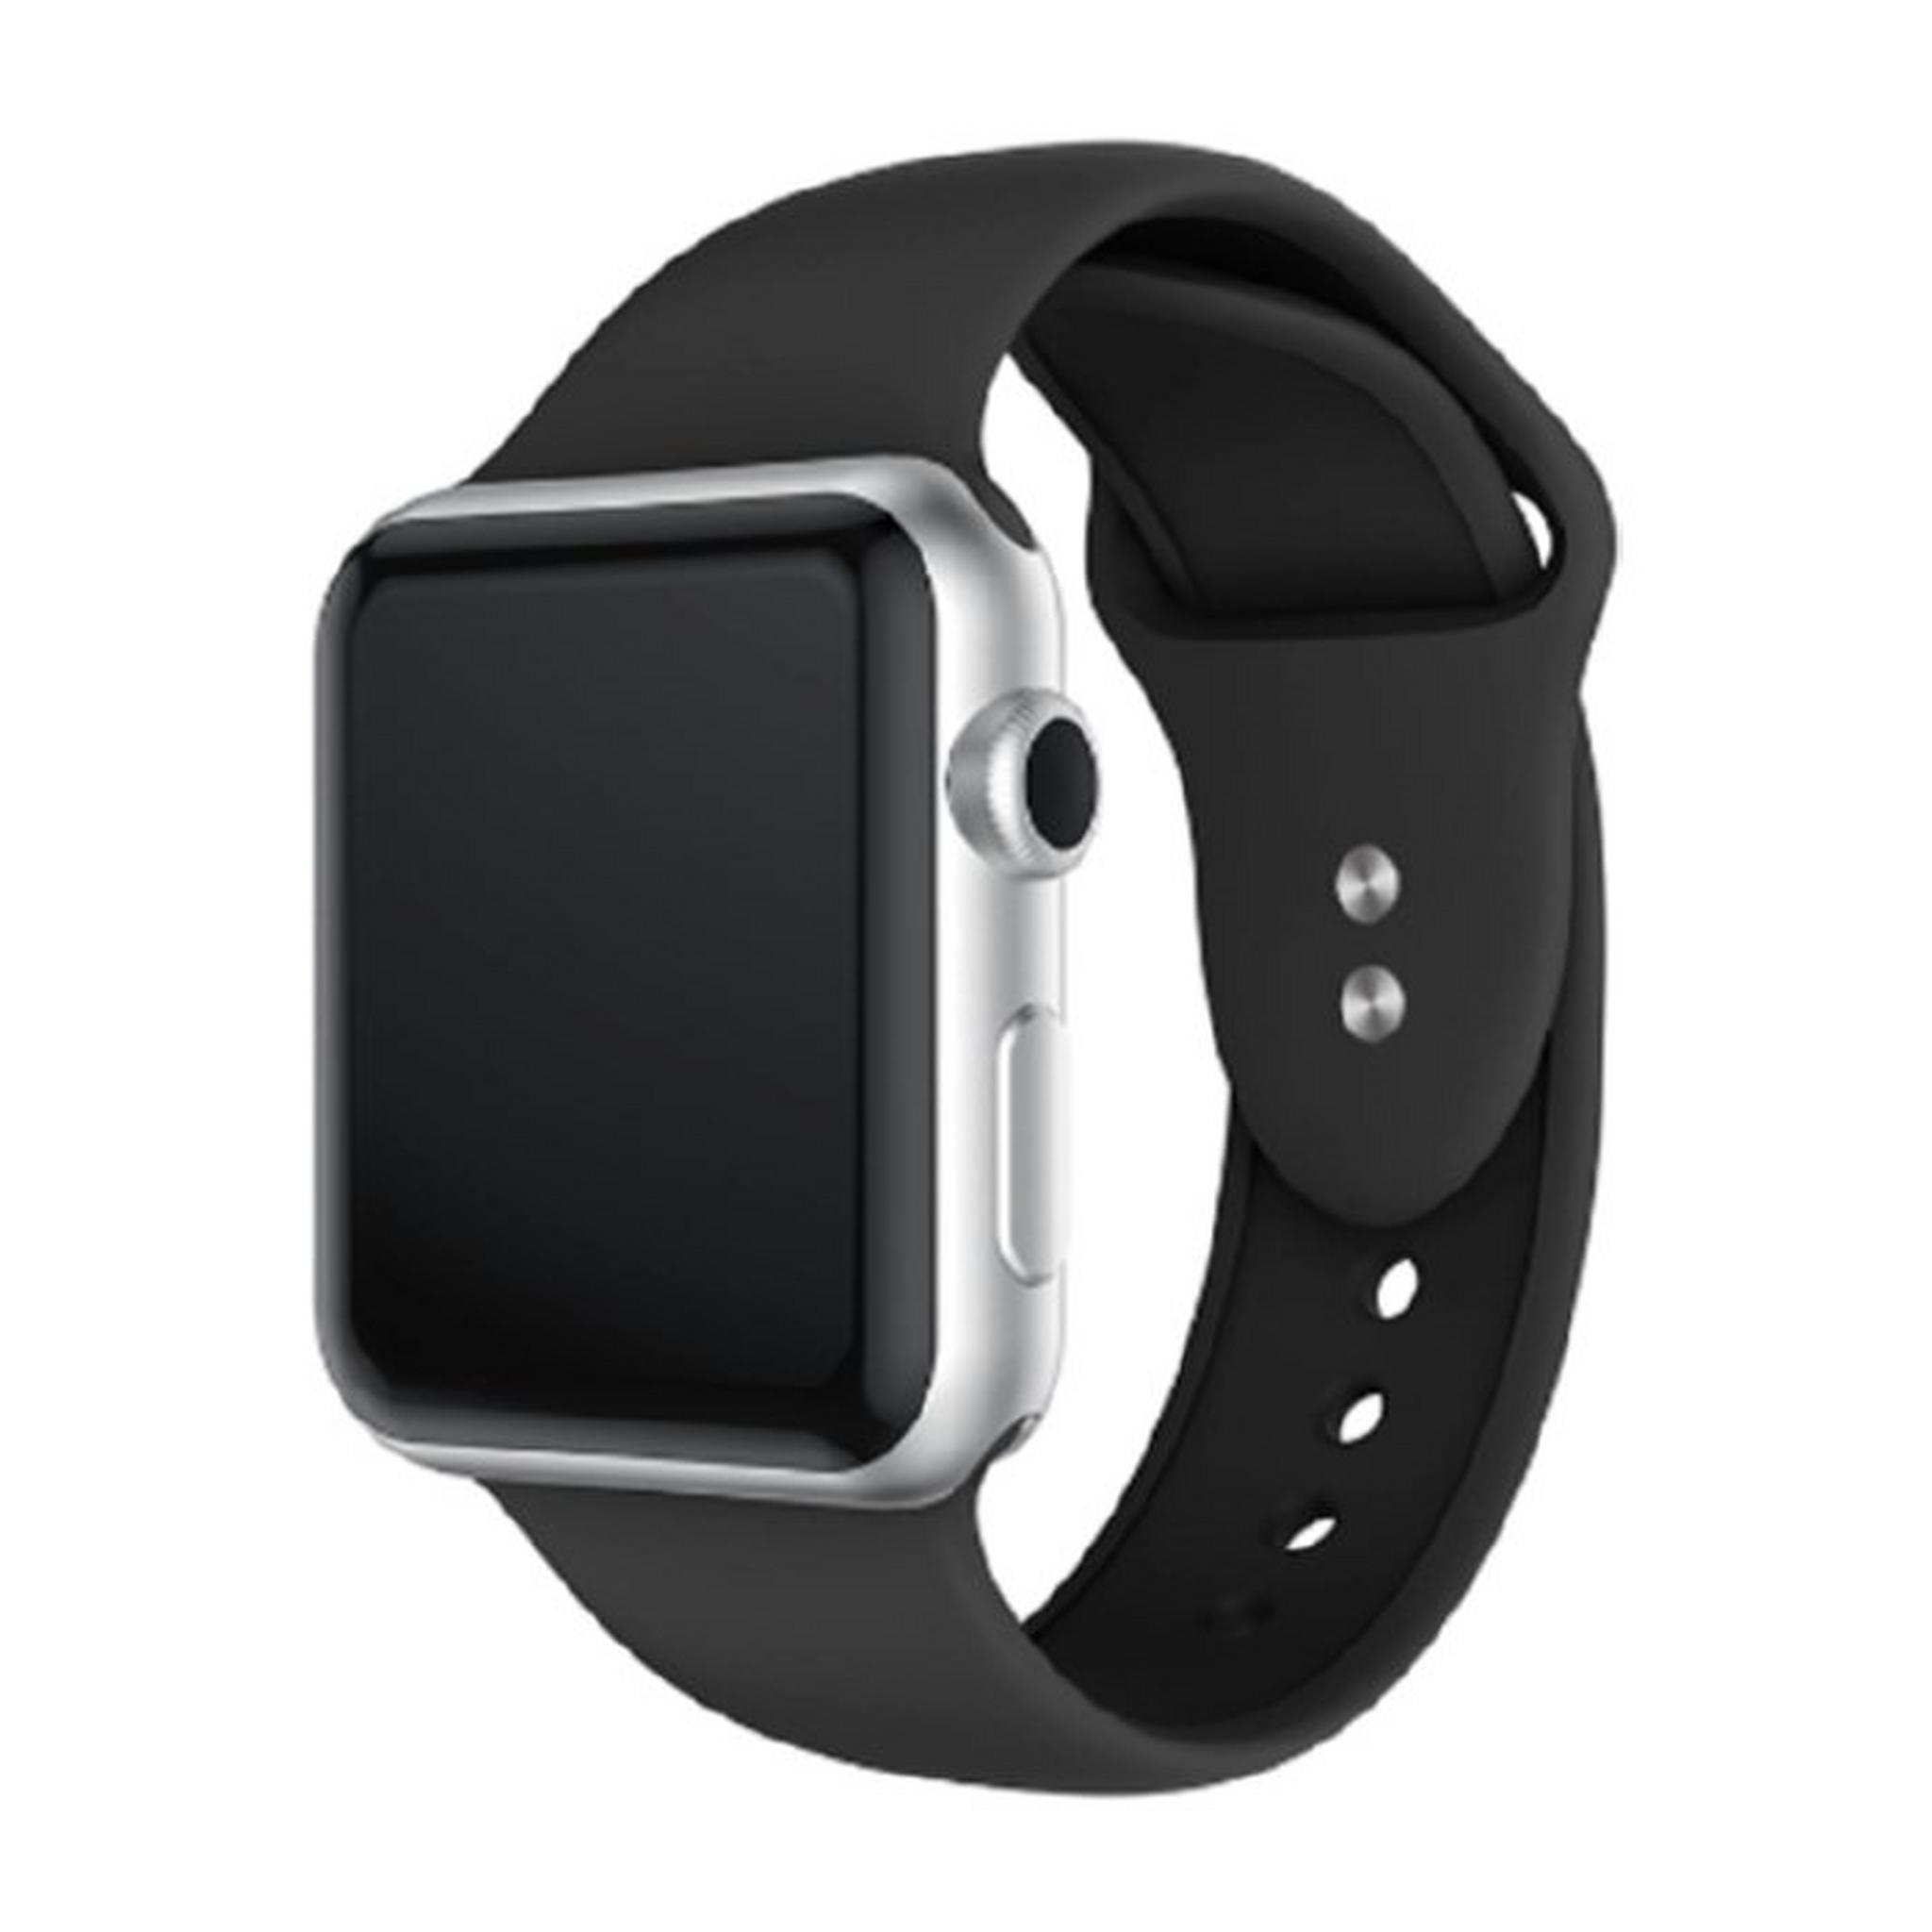 EQ Apple Watch Band Size 42/44MM - Black